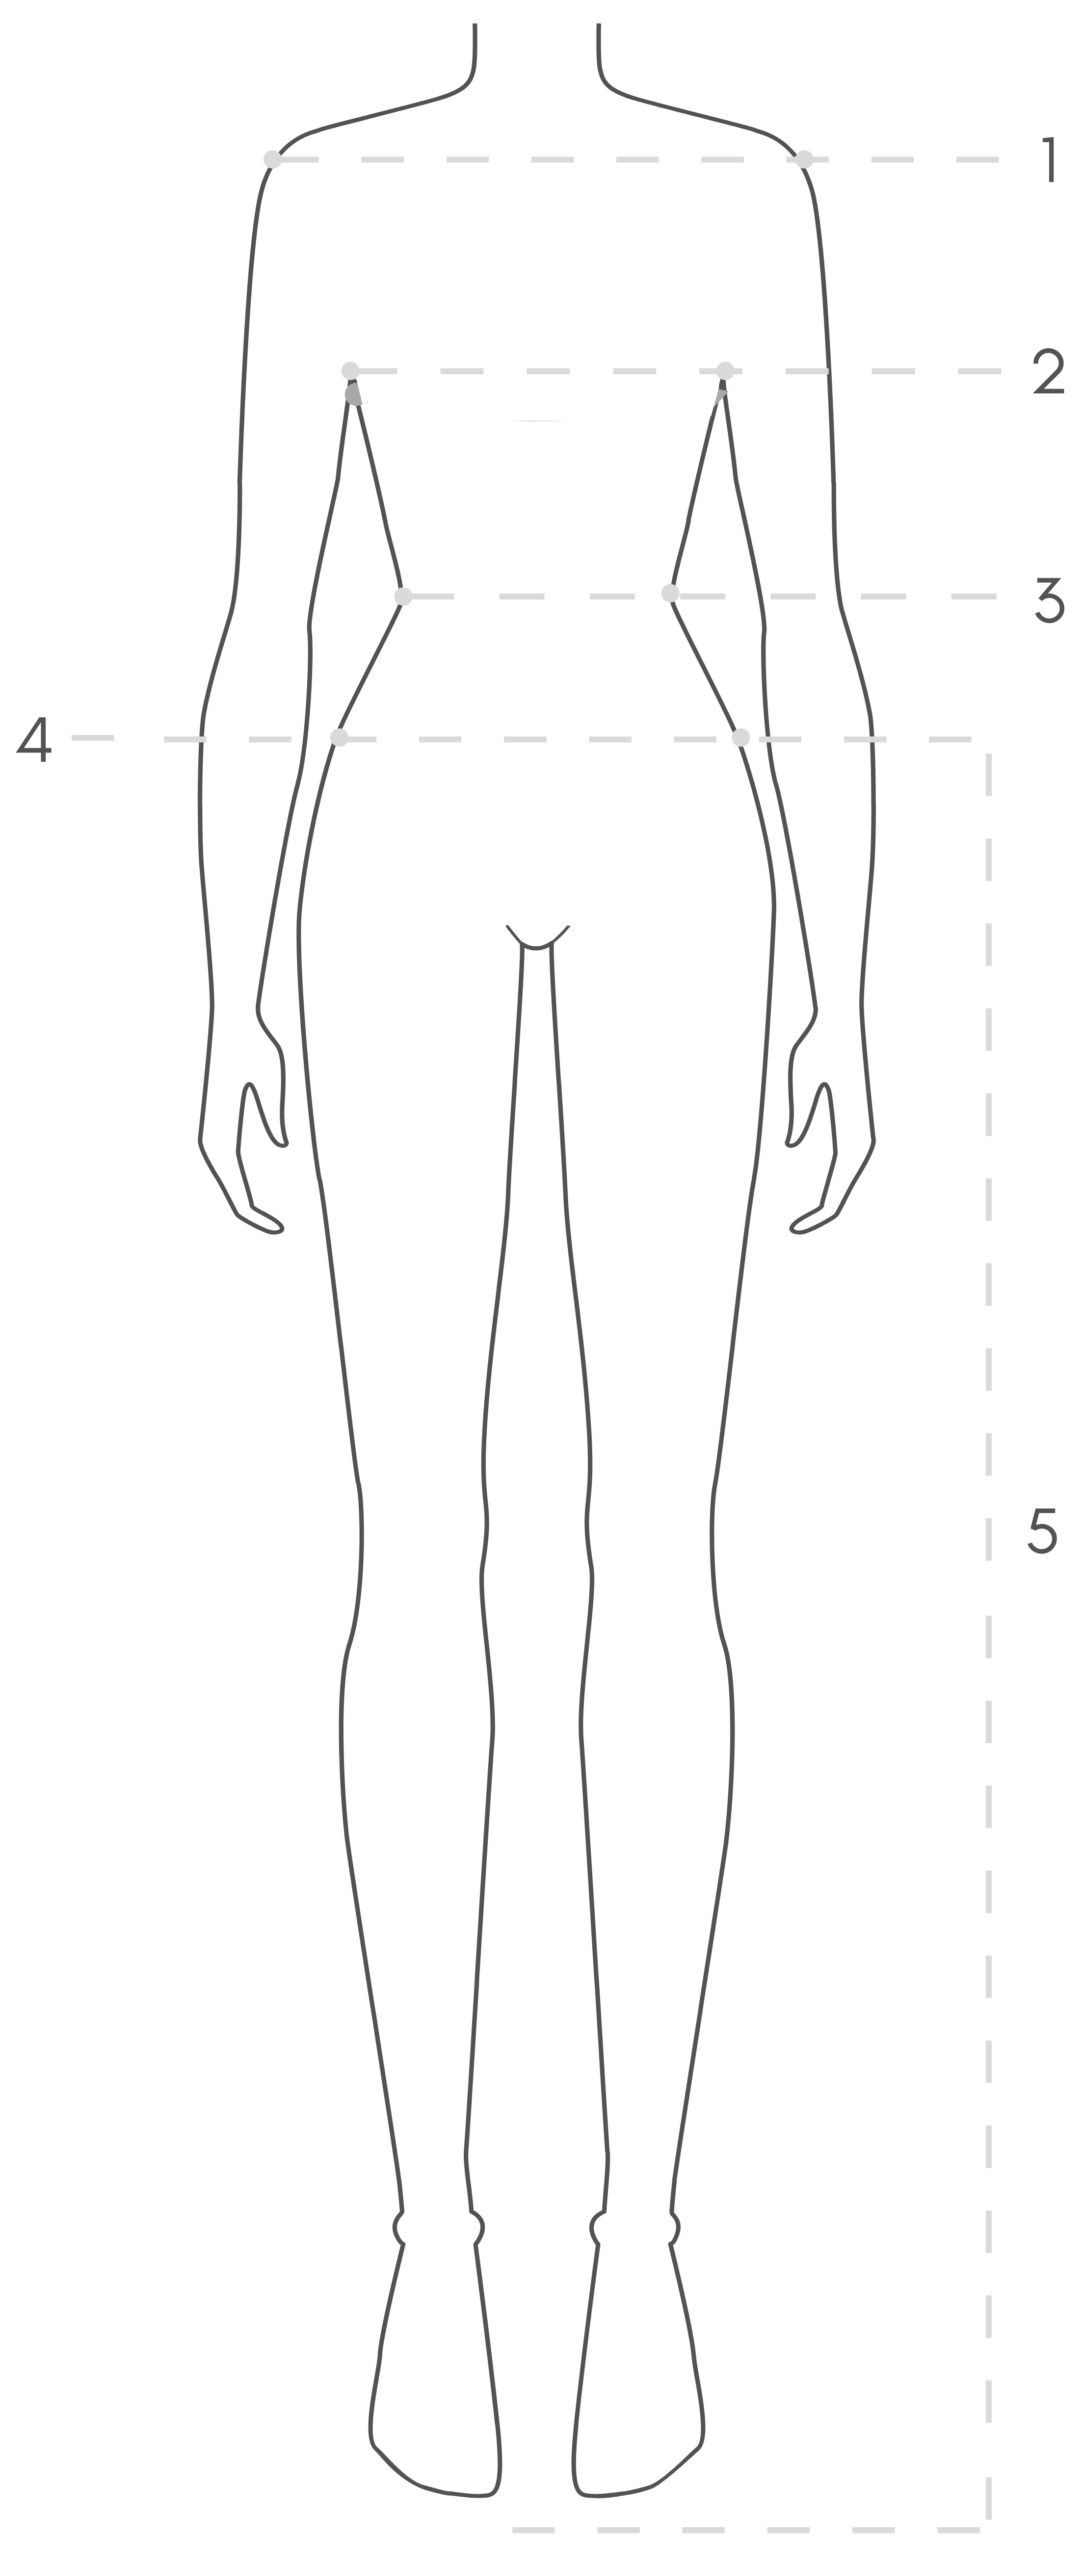 Size-Guide-Measurements-Image